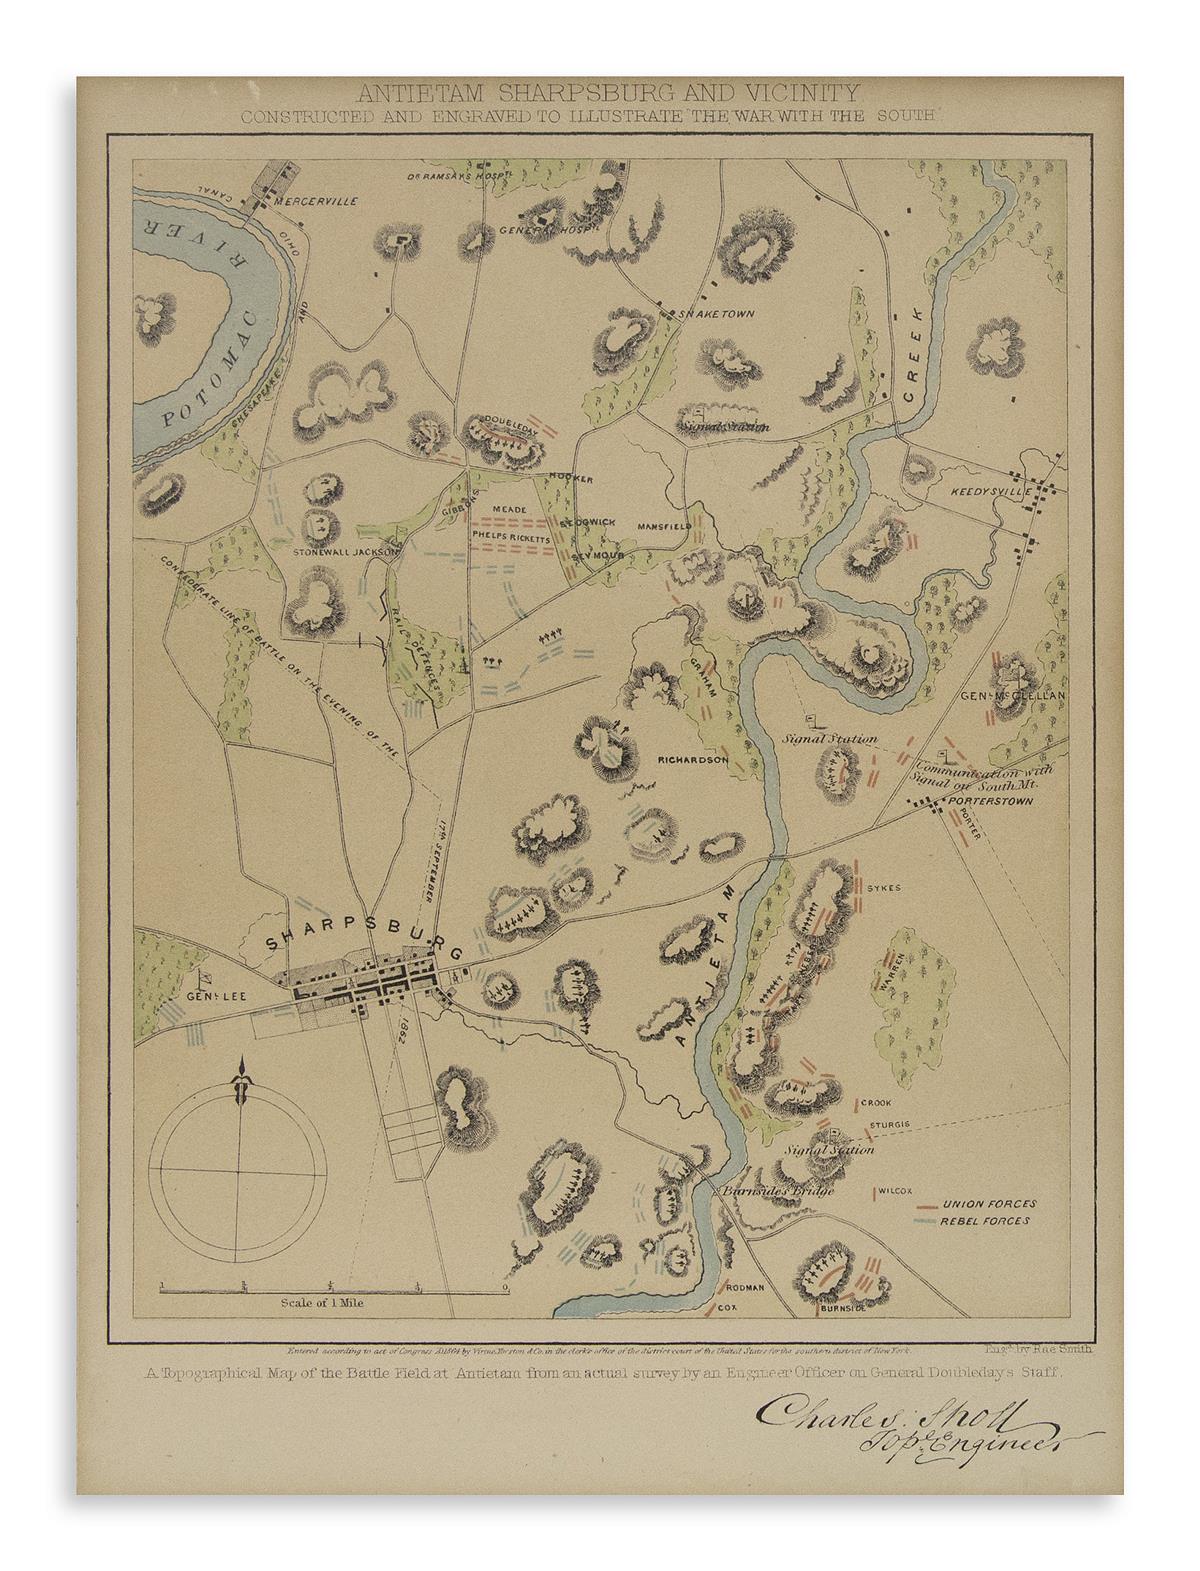 (CIVIL WAR.) Sholl, Charles. Gettysburg and Vicinity; and Antietam, Sharpsburg and Vicinity.